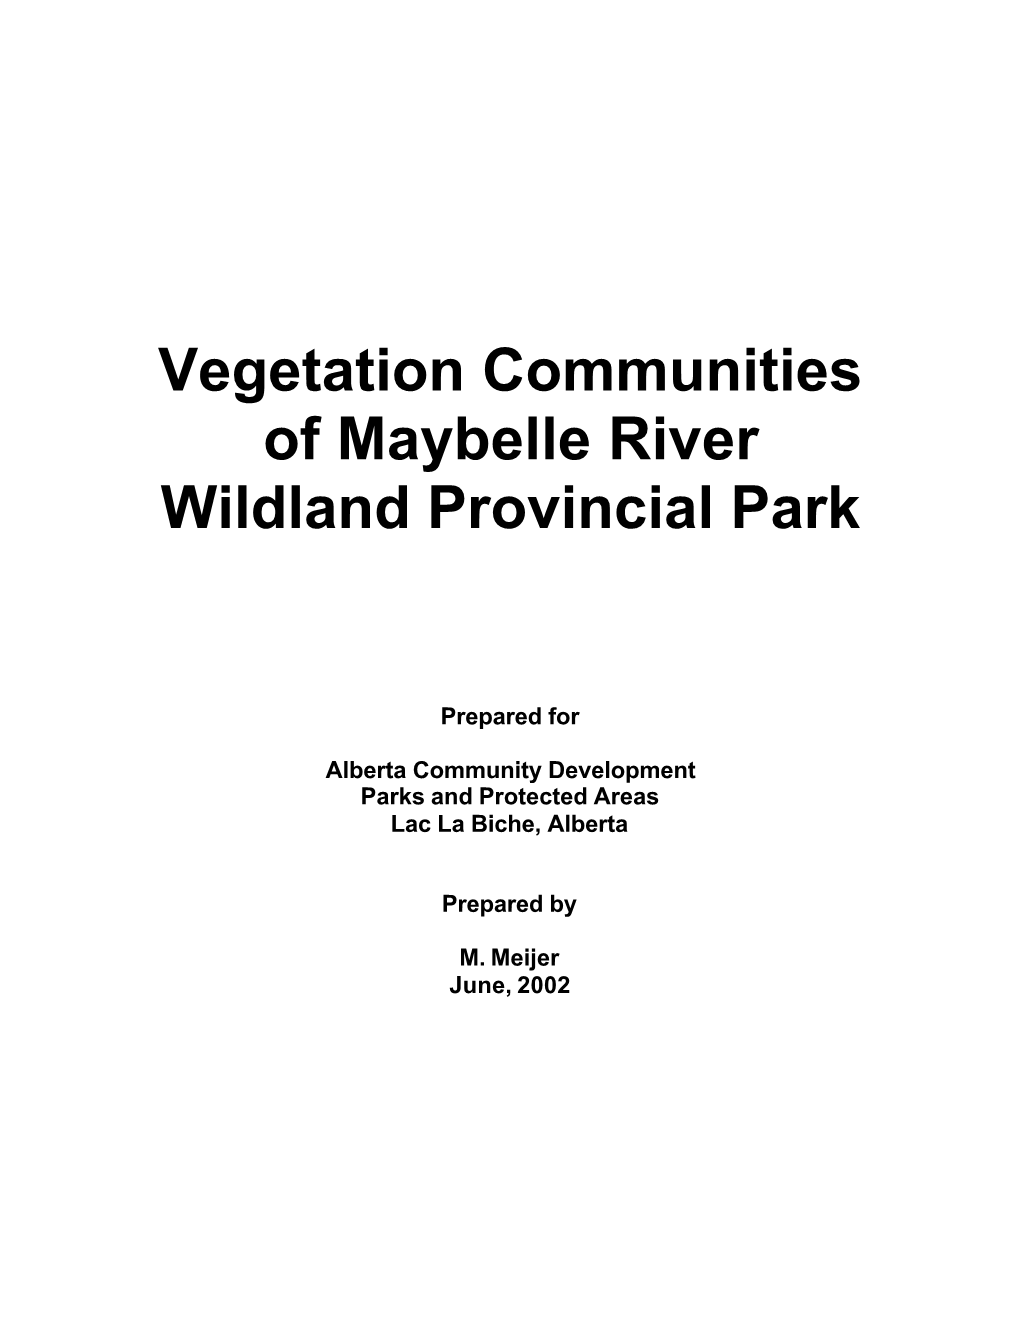 Vegetation Communities of Maybelle River Wildland Provincial Park